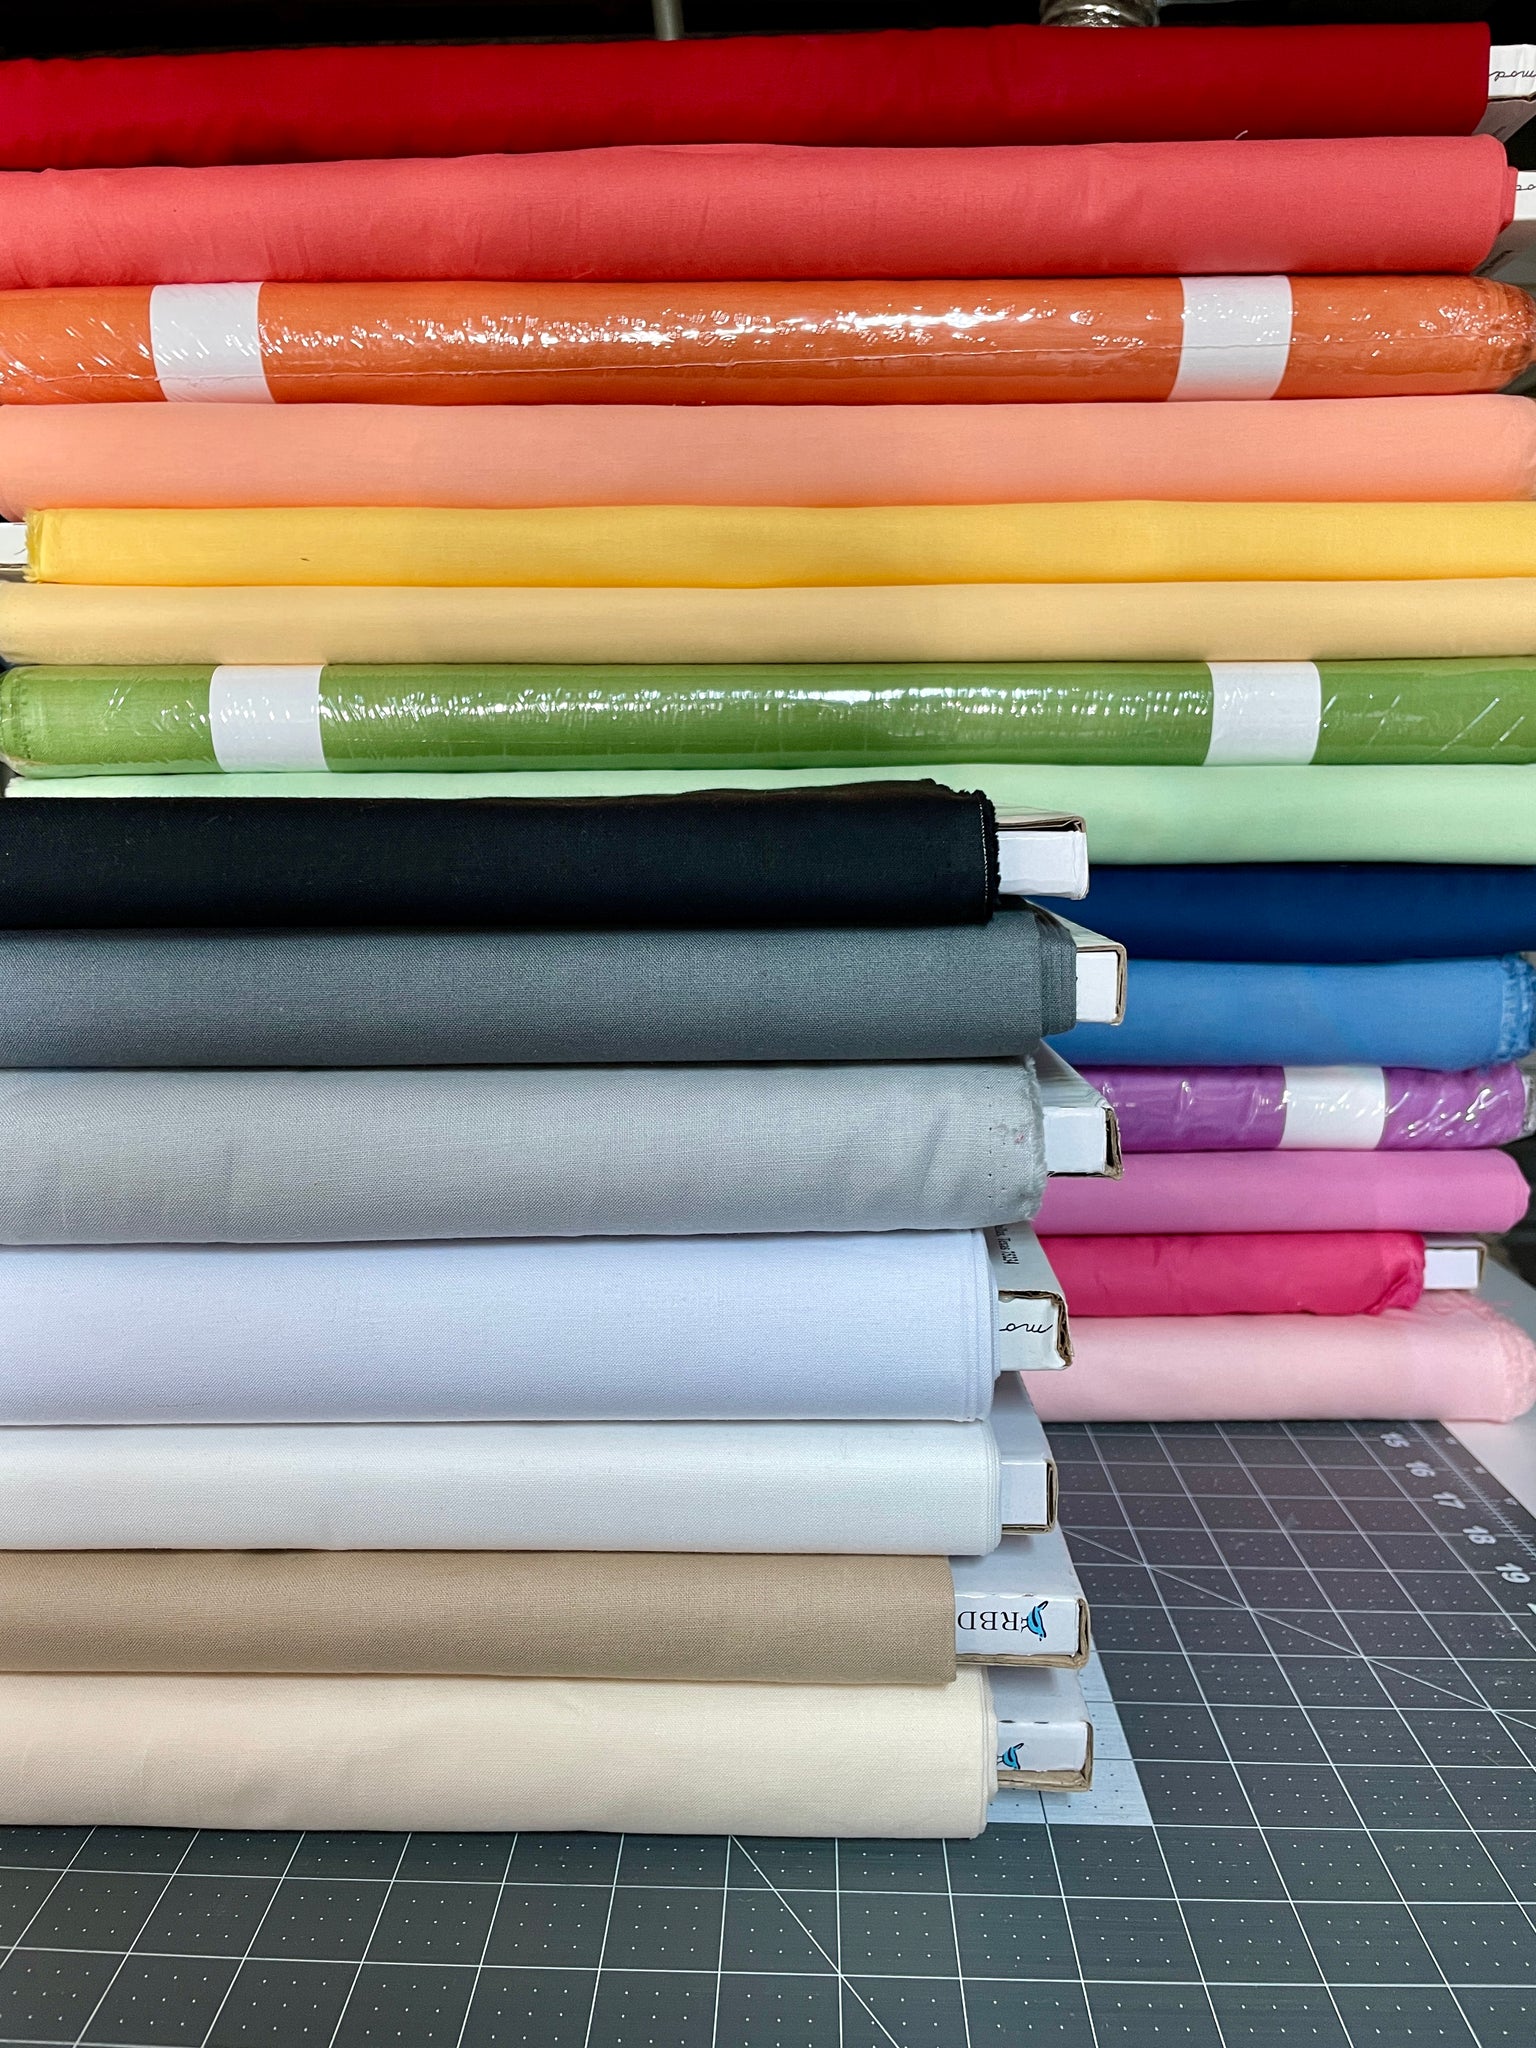 5pcs Rainbow Fat Quarters Solid Quilting Fabric Bundles 18 x 22 inches